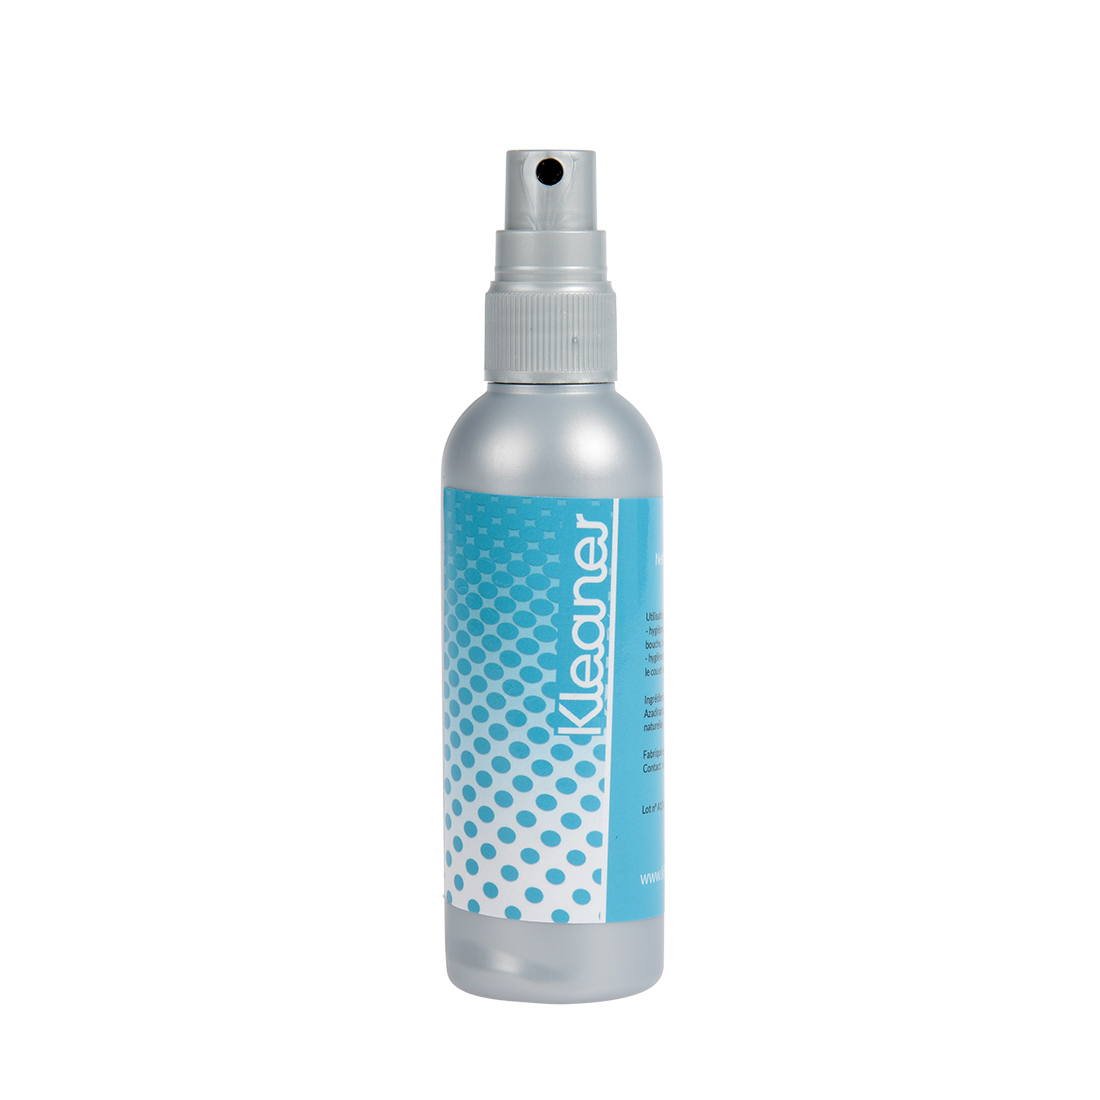 Spray Kleaner 100ml, disponible sur S Factory !